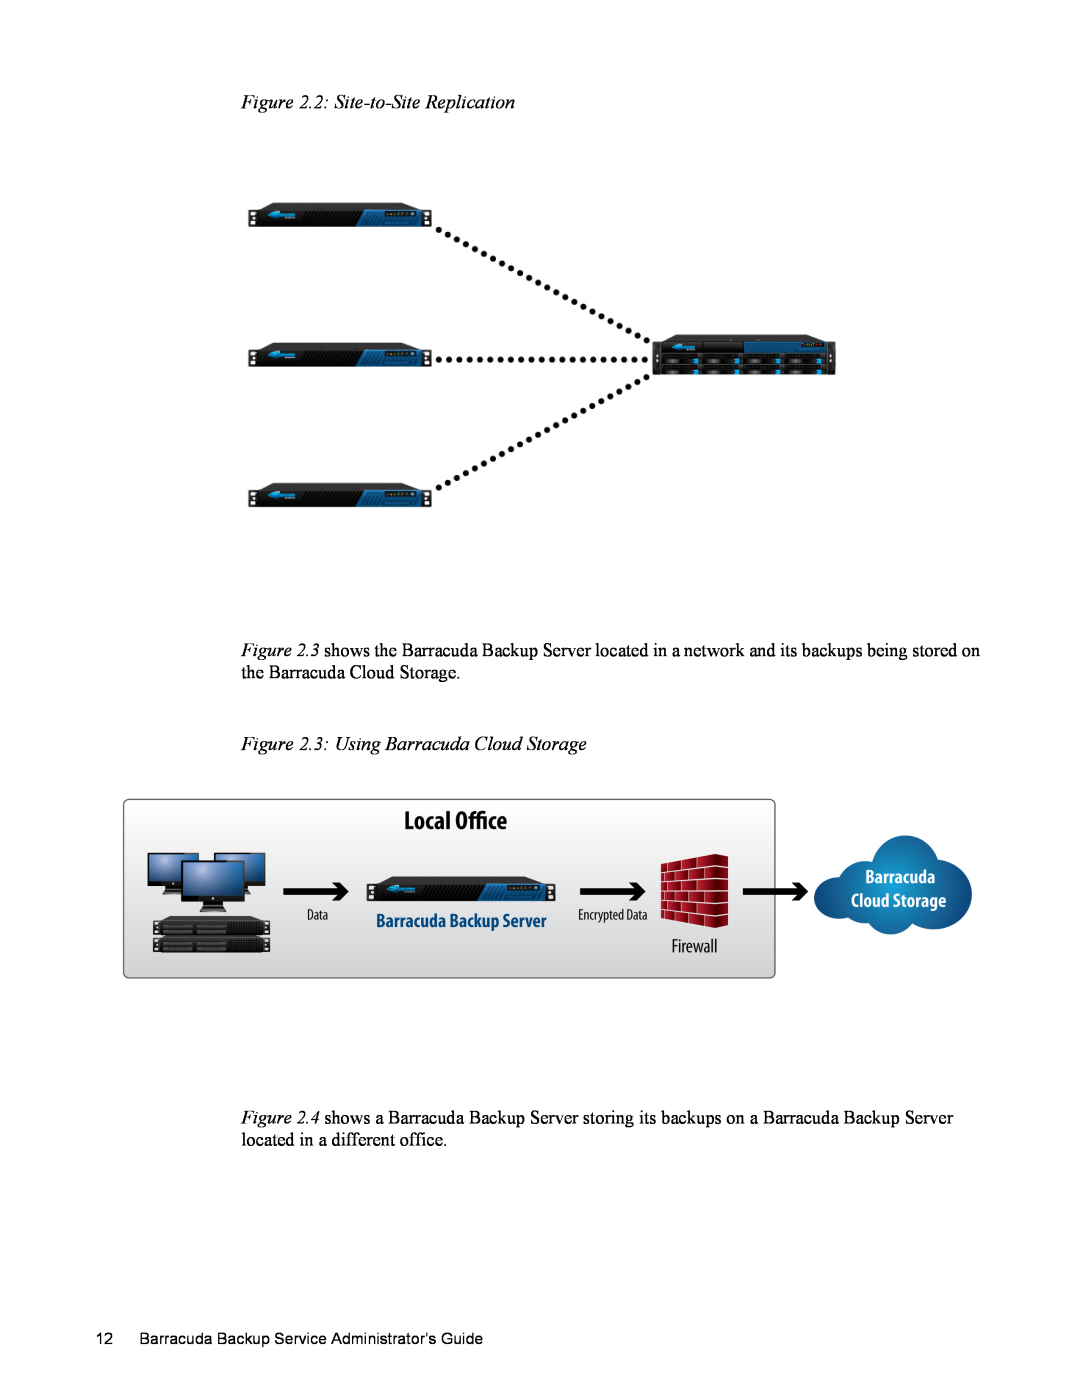 Barracuda Networks 4 manual 2 Site-to-Site Replication, 3 Using Barracuda Cloud Storage 